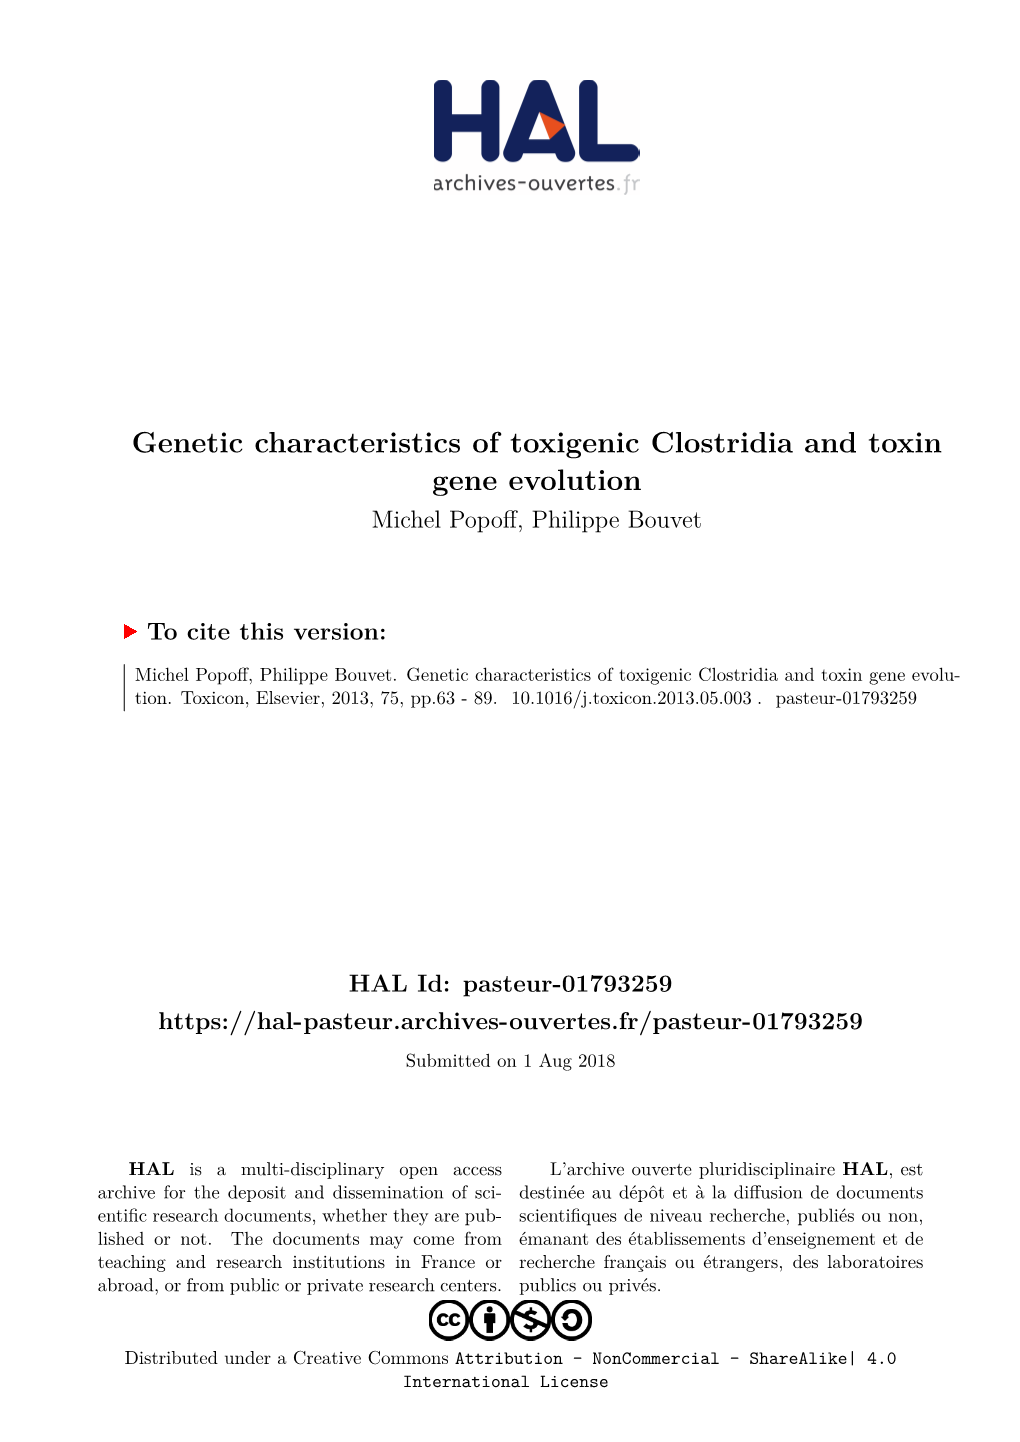 Genetic Characteristics of Toxigenic Clostridia and Toxin Gene Evolution Michel Popoff, Philippe Bouvet